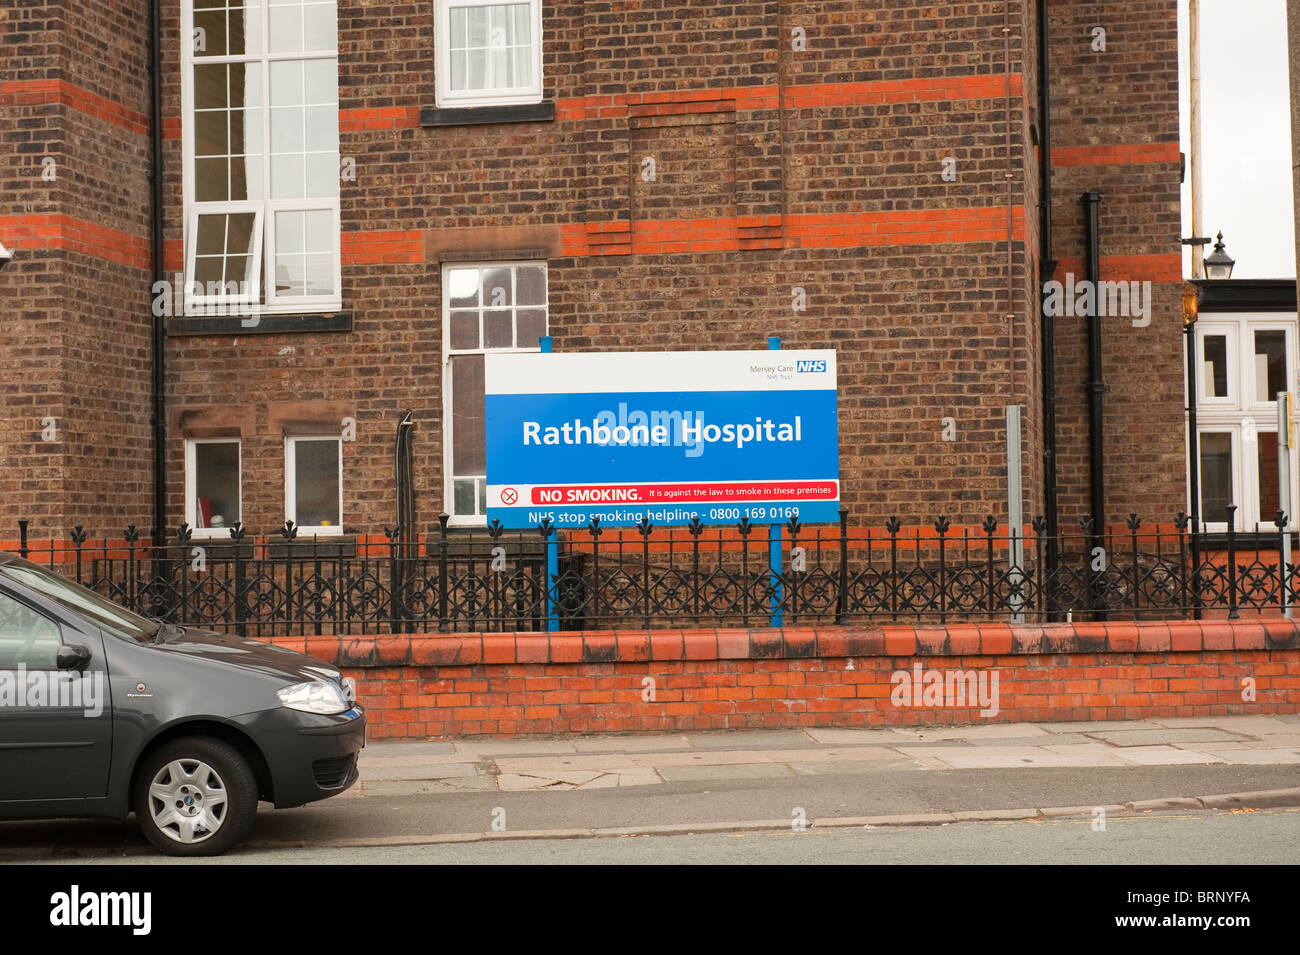 Rathbone secure Psychiatric Hospital Liverpool UK Stock Photo